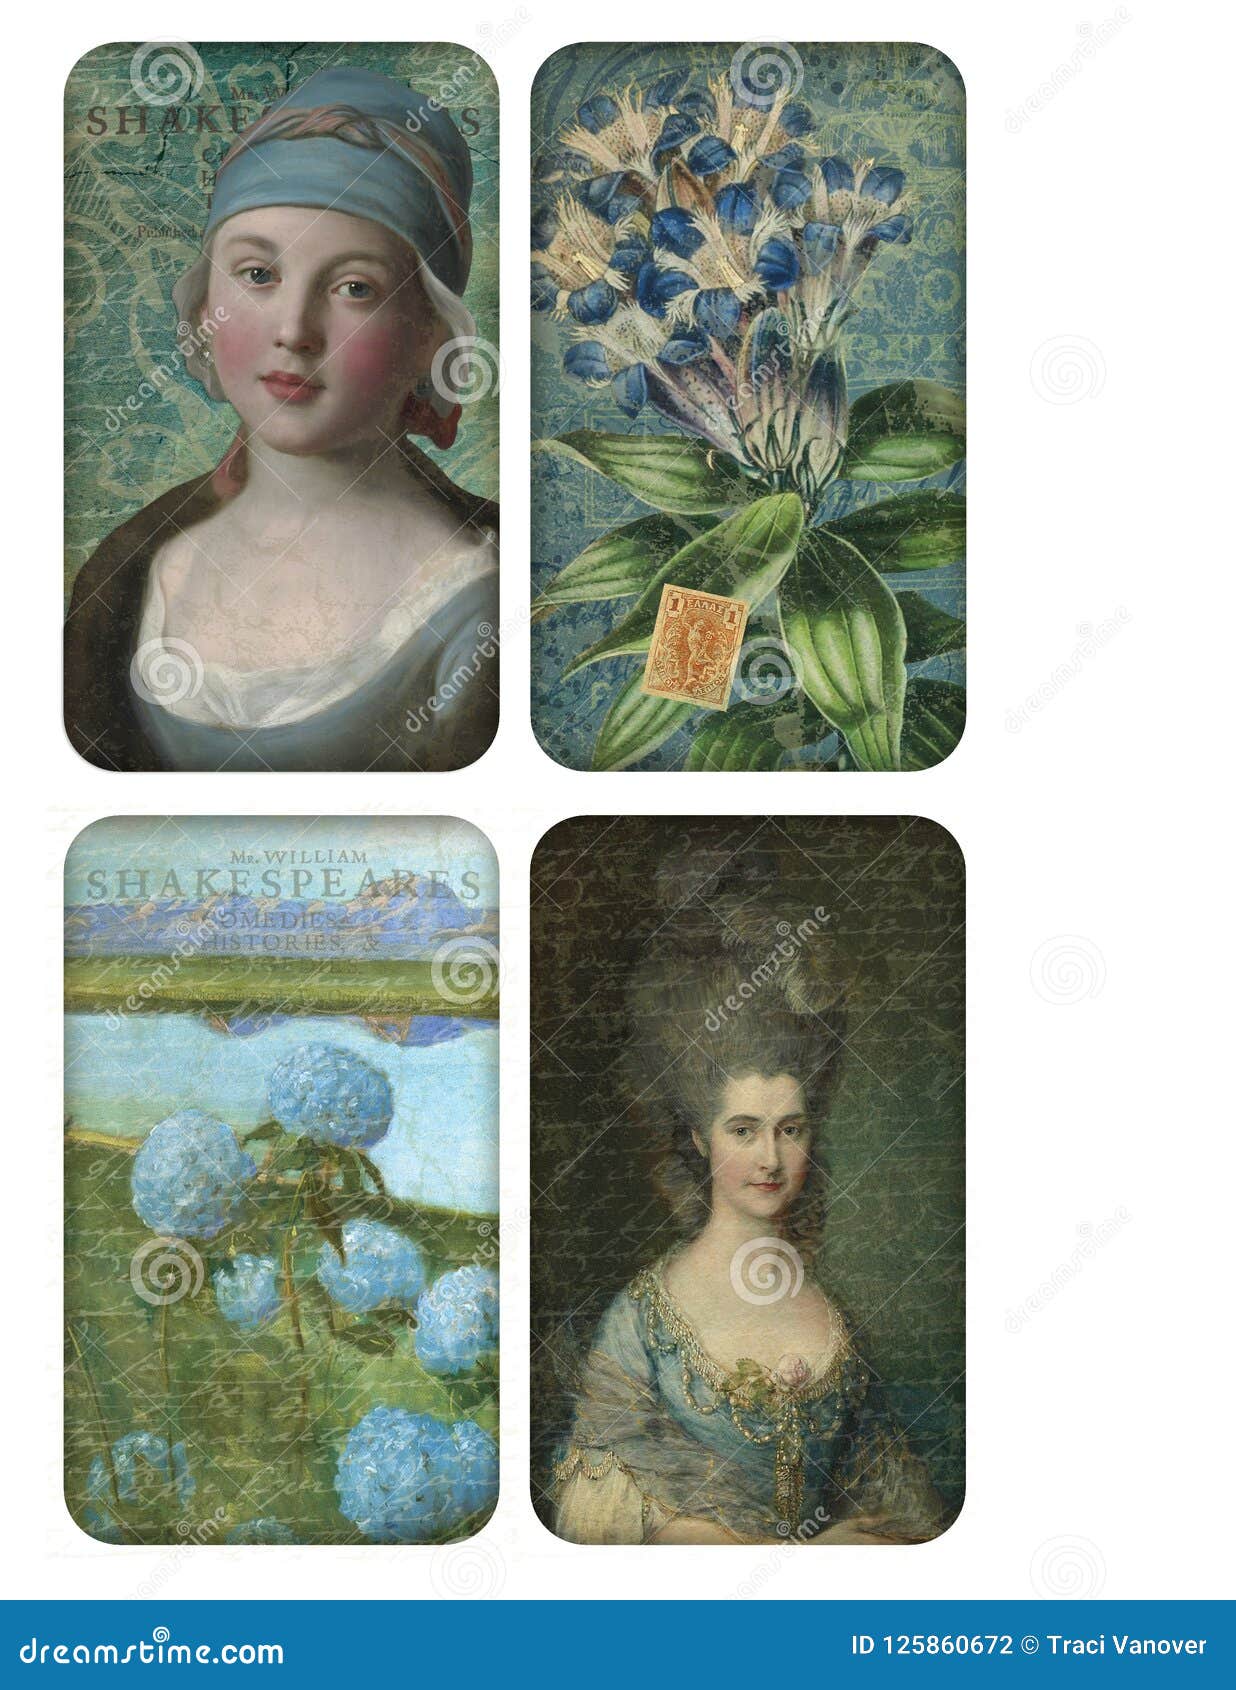 instant download postcard printable Ephemera digital collage sheet cards Flower Fairy images